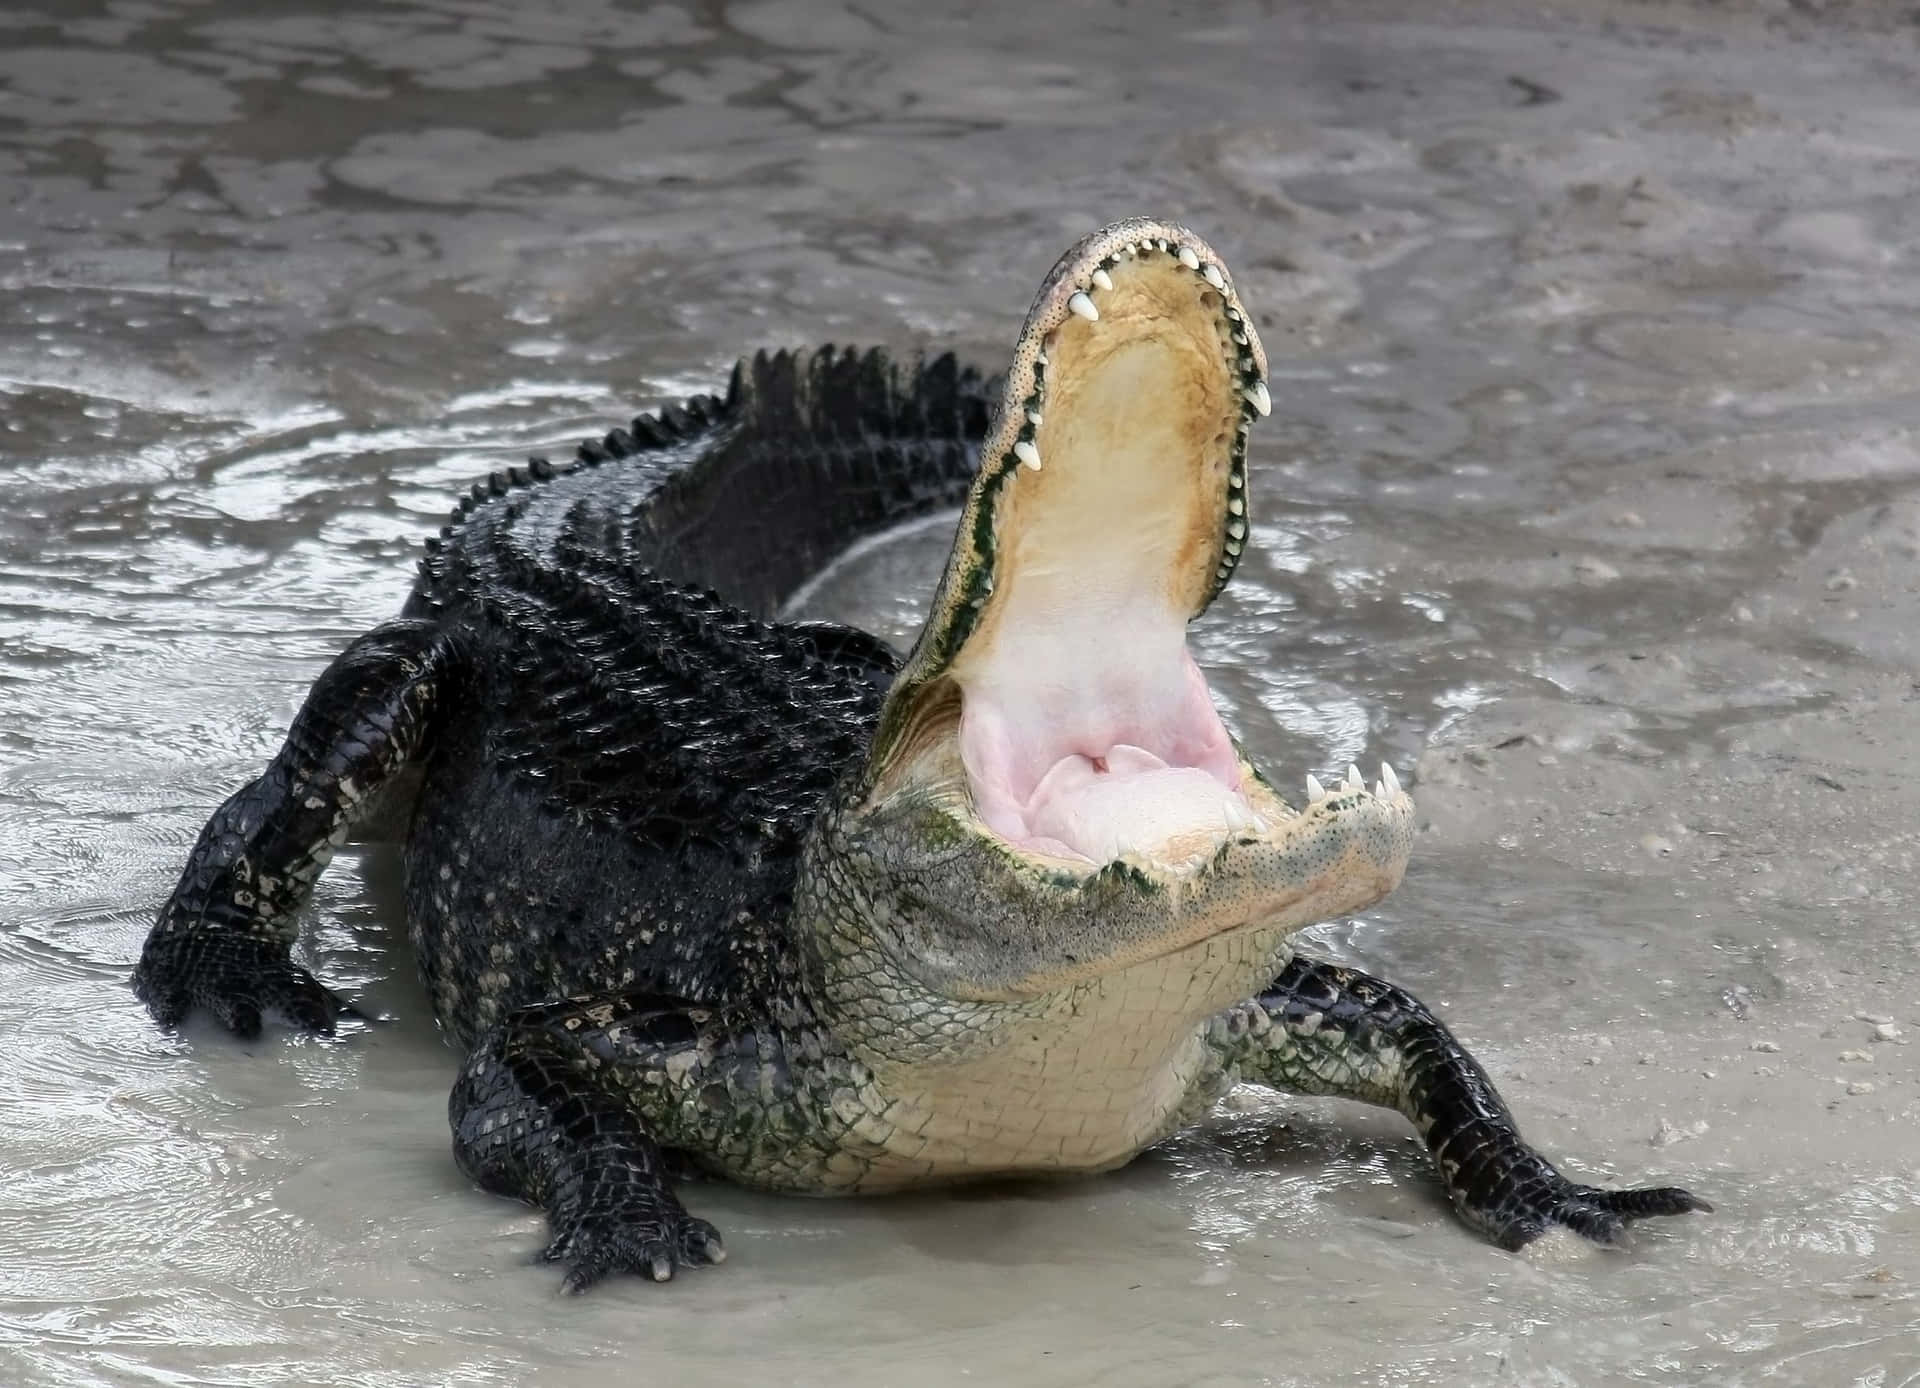 Alligator in the wild, monitoring its natural habitat